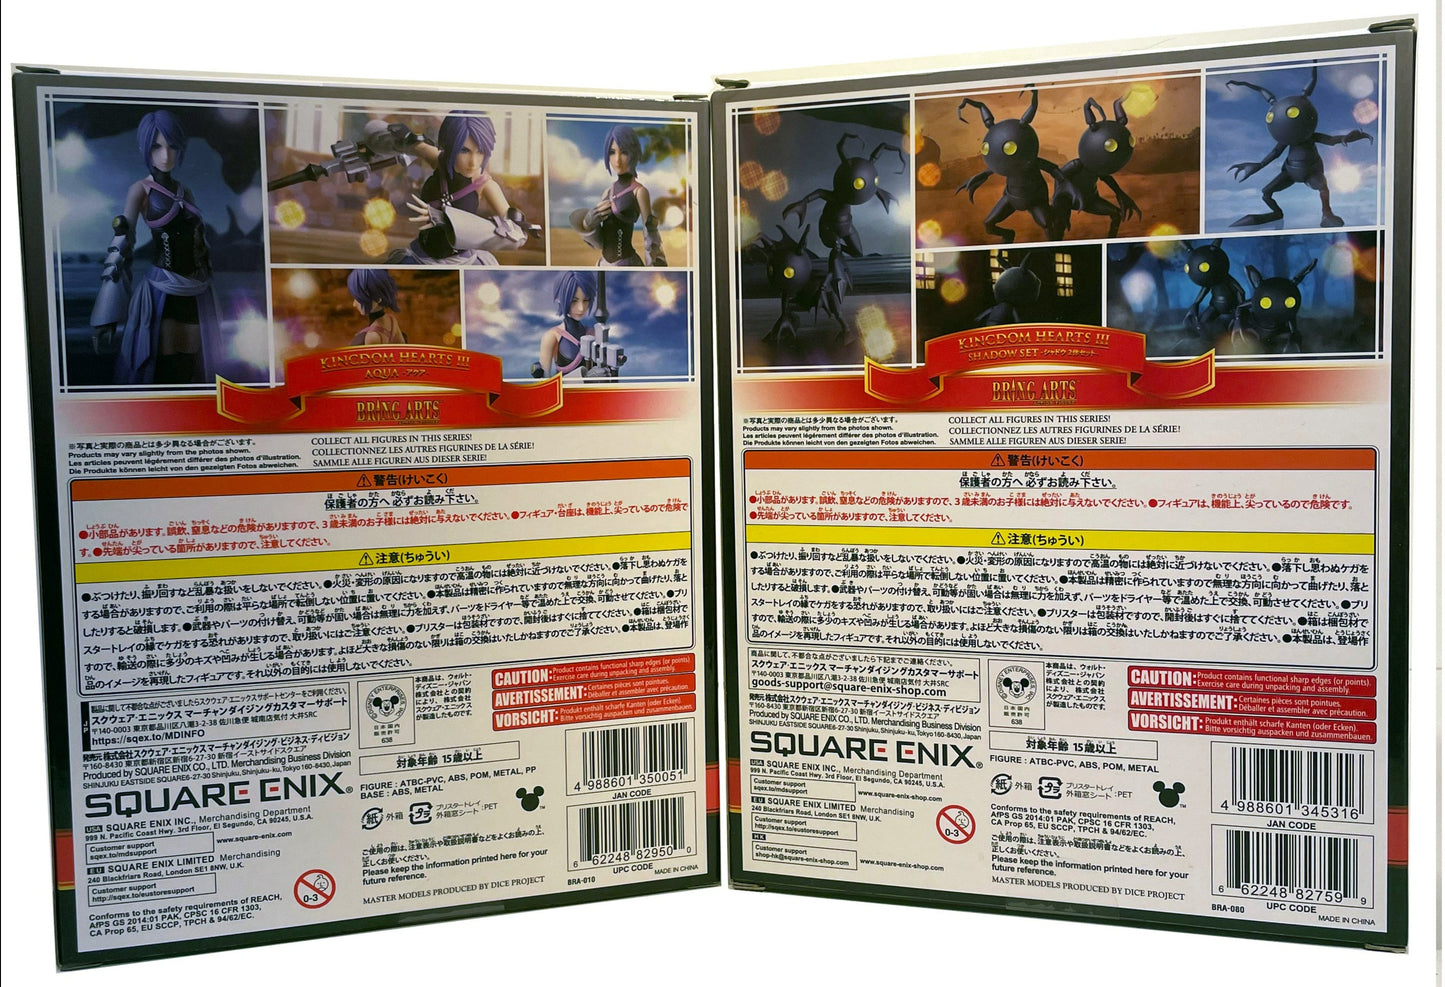 Bring Arts Kingdom Hearts III (3) Aqua and Shadow 2-Pack Figure BUNDLE/LOT